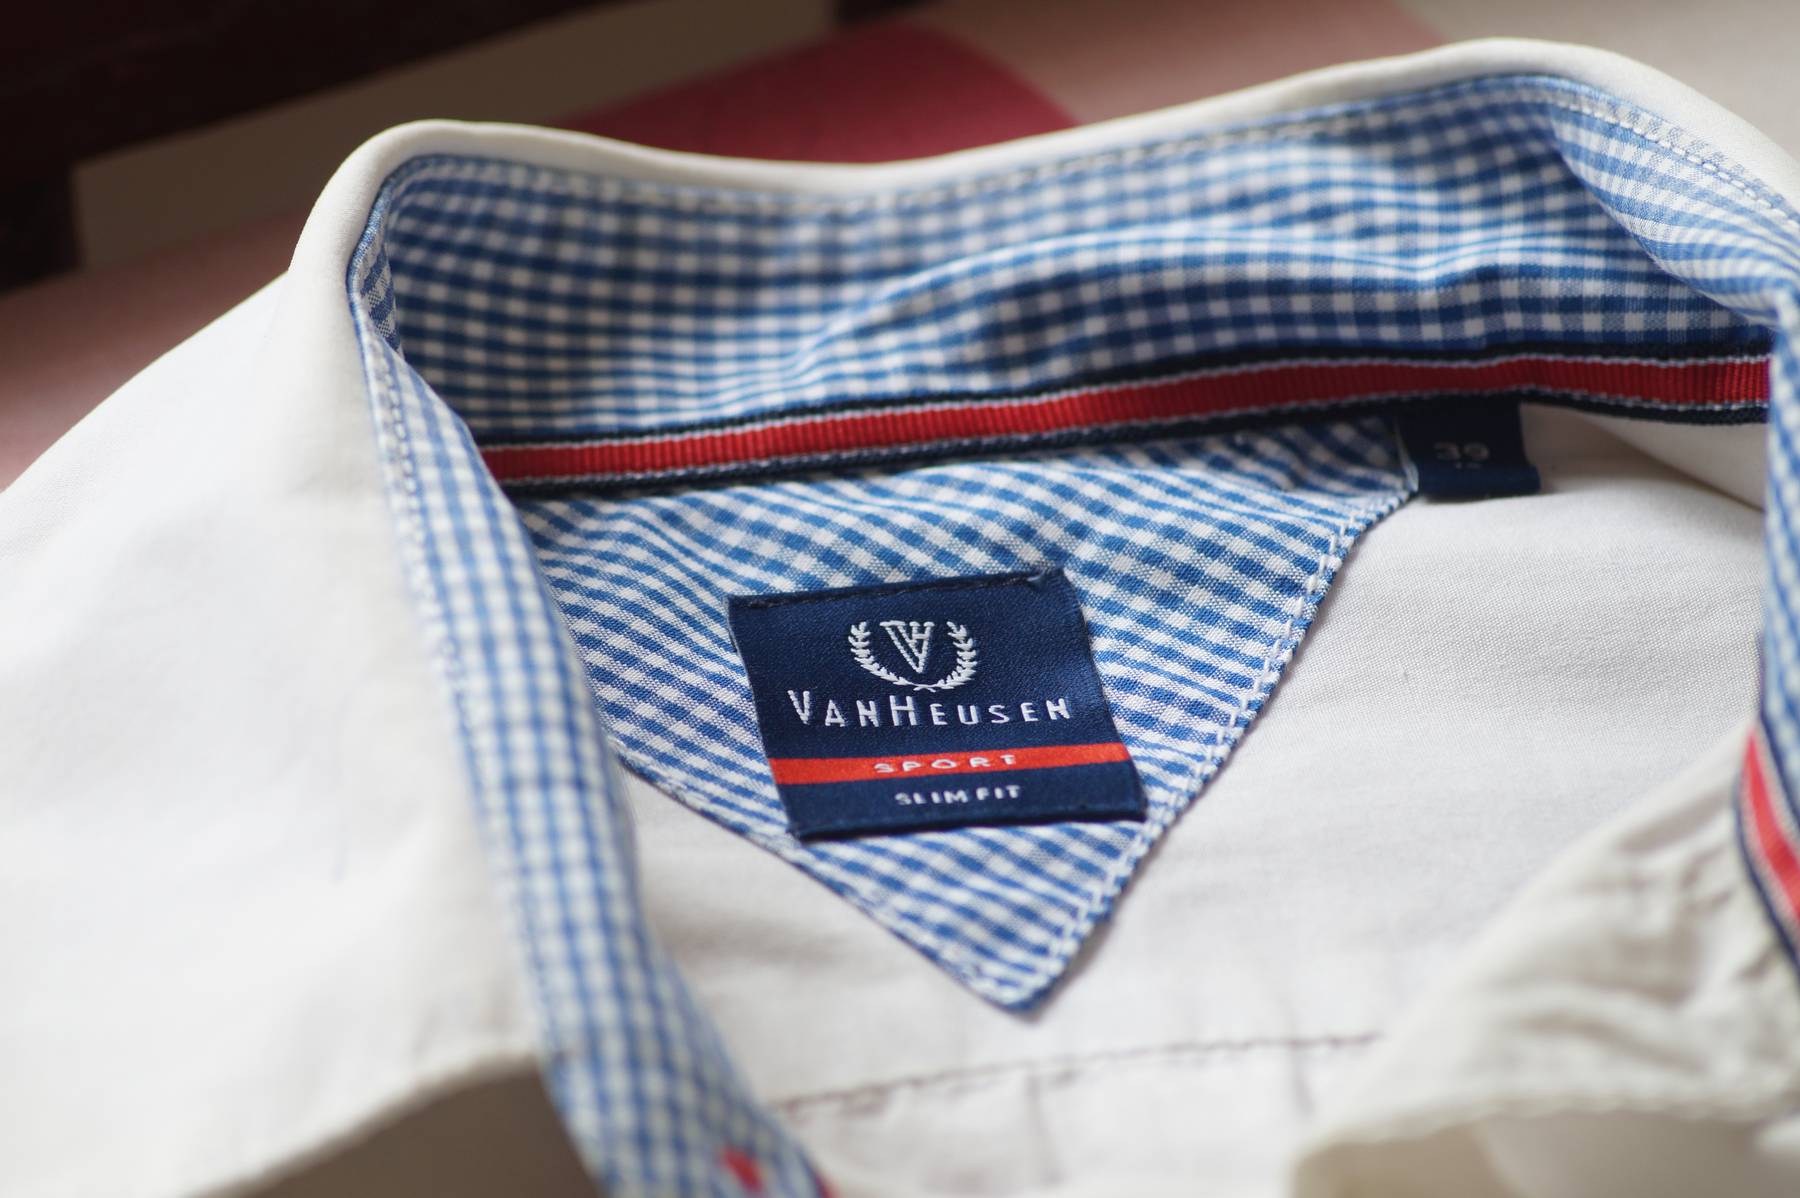 Van Heusen shirt. Shutterstock